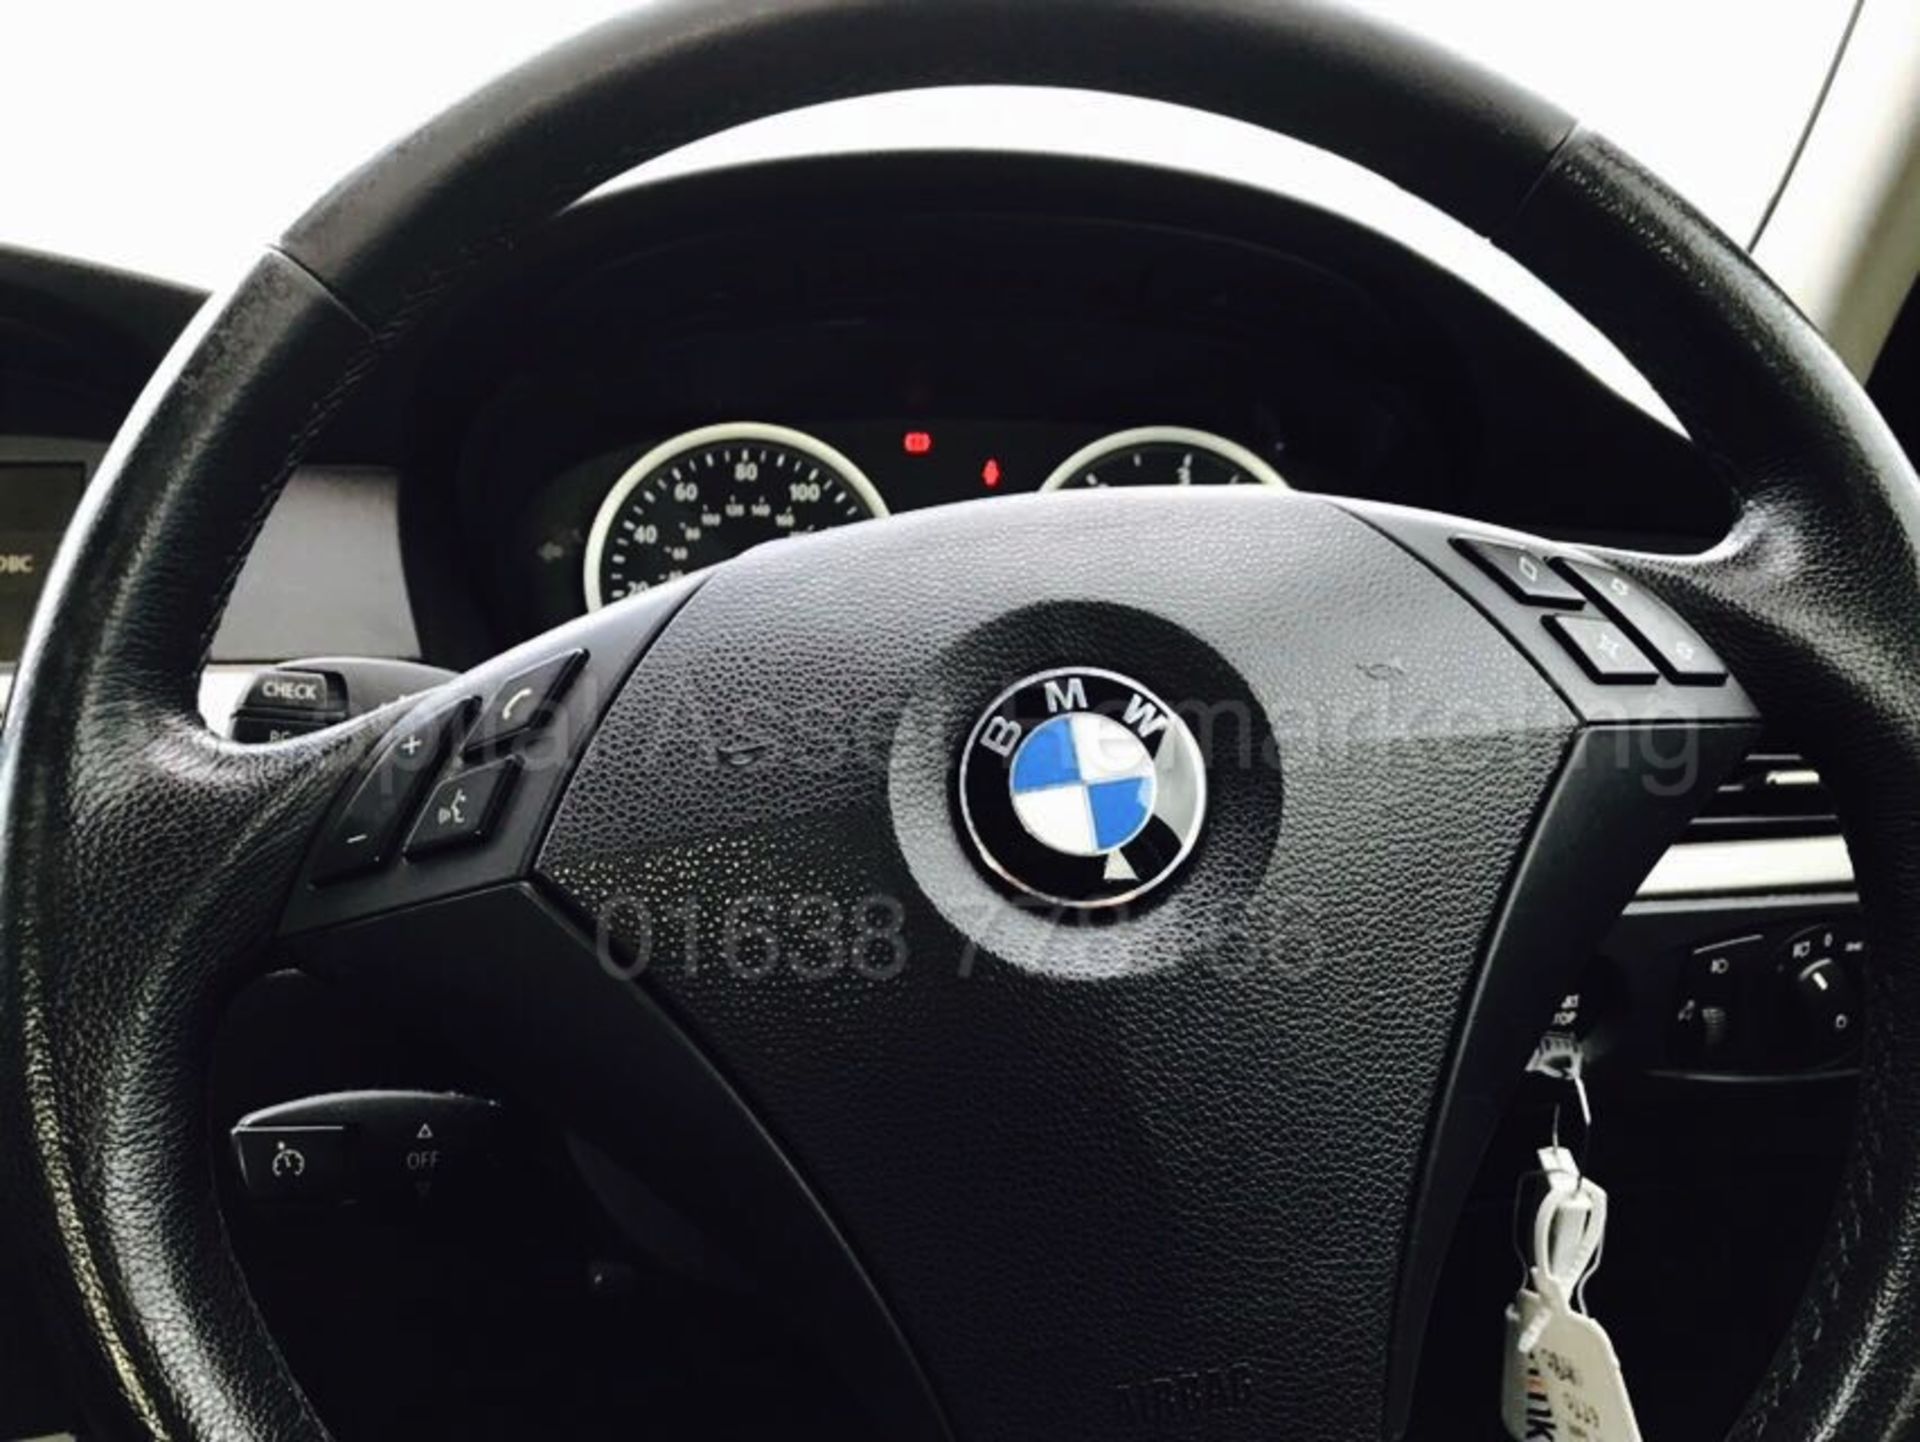 BMW 520D 'SE - SALOON' (2007 MODEL) '2.0 DIESEL - 163 BHP - 6 SPEED' *50 MPG+* (NO VAT - SAVE 20%) - Image 15 of 17